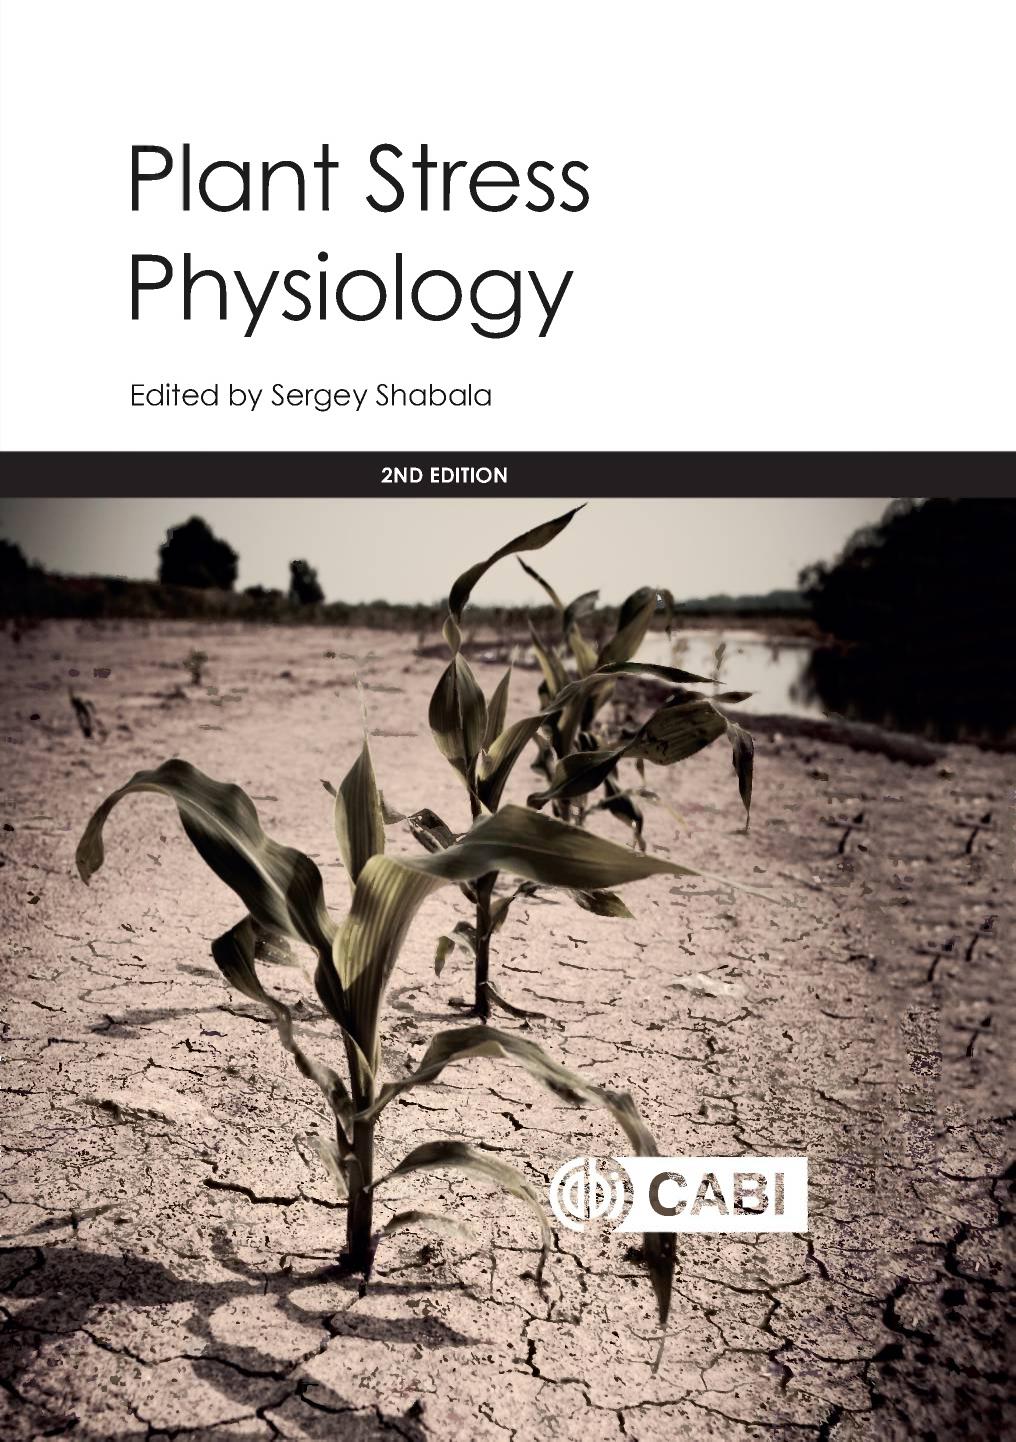 Plant stress physiology ( PDFDrive ), 2017